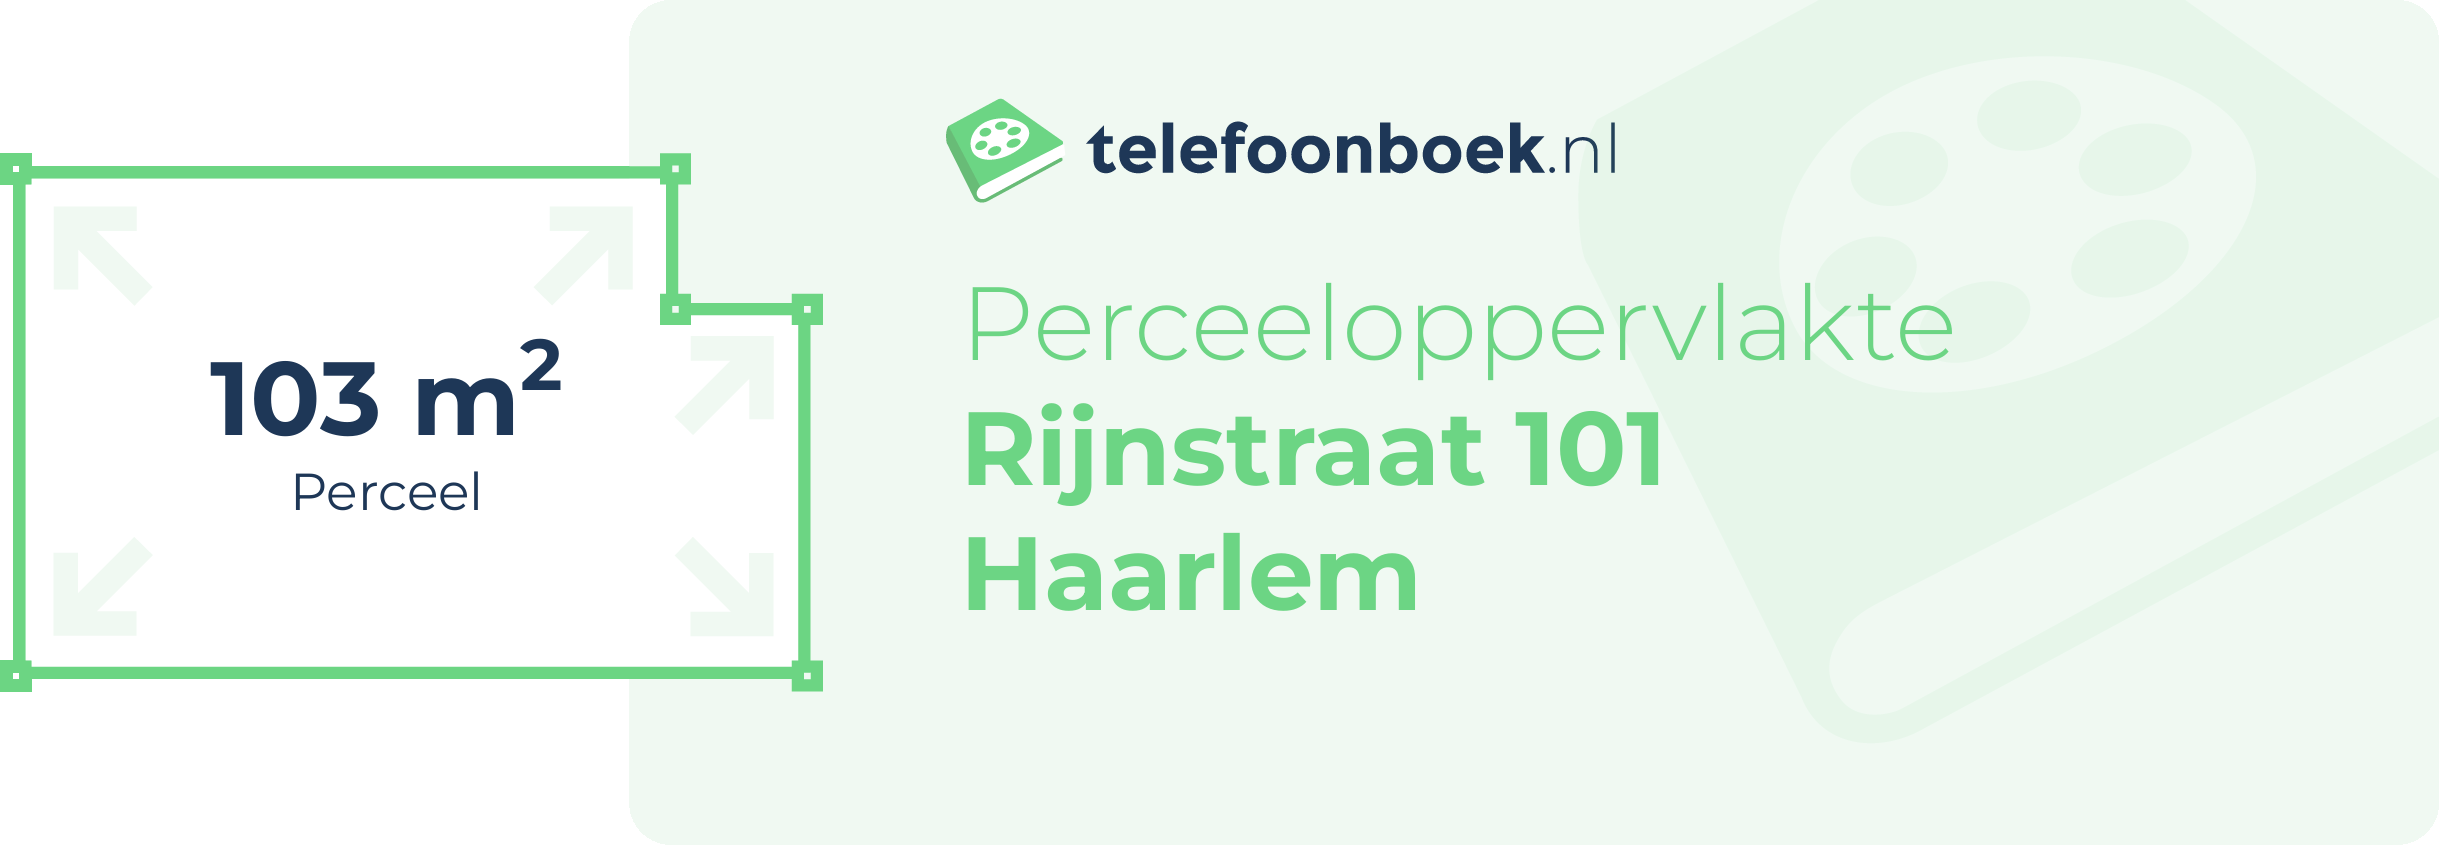 Perceeloppervlakte Rijnstraat 101 Haarlem